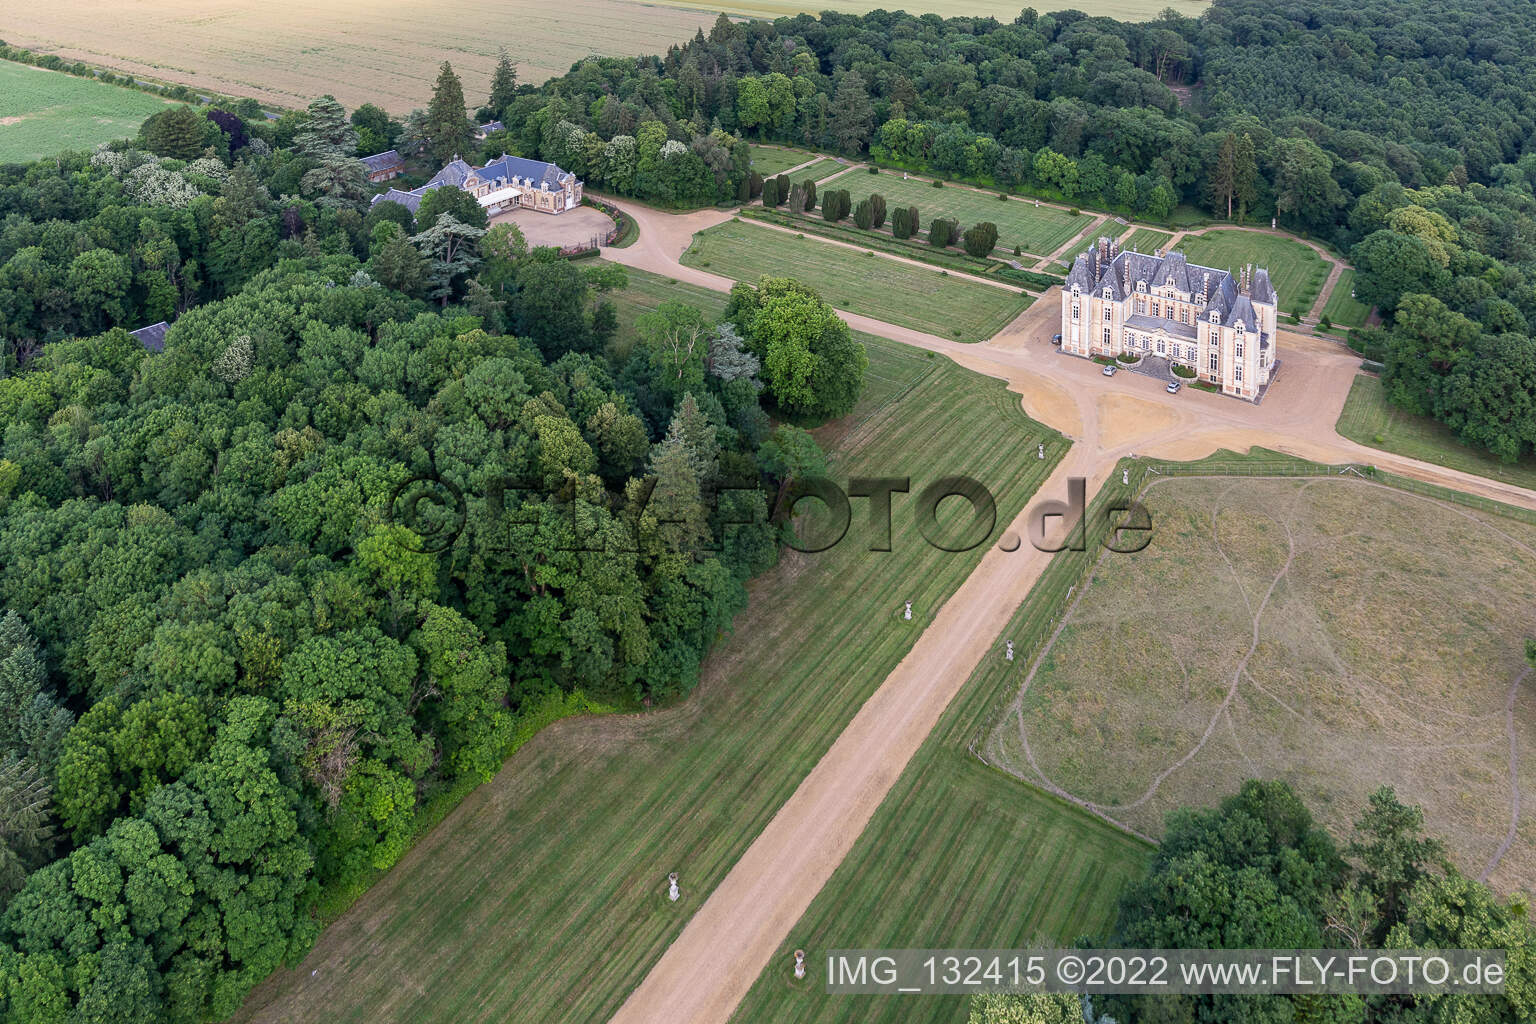 Schrägluftbild von Le Domaine de La Pierre in Coudrecieux im Bundesland Sarthe, Frankreich